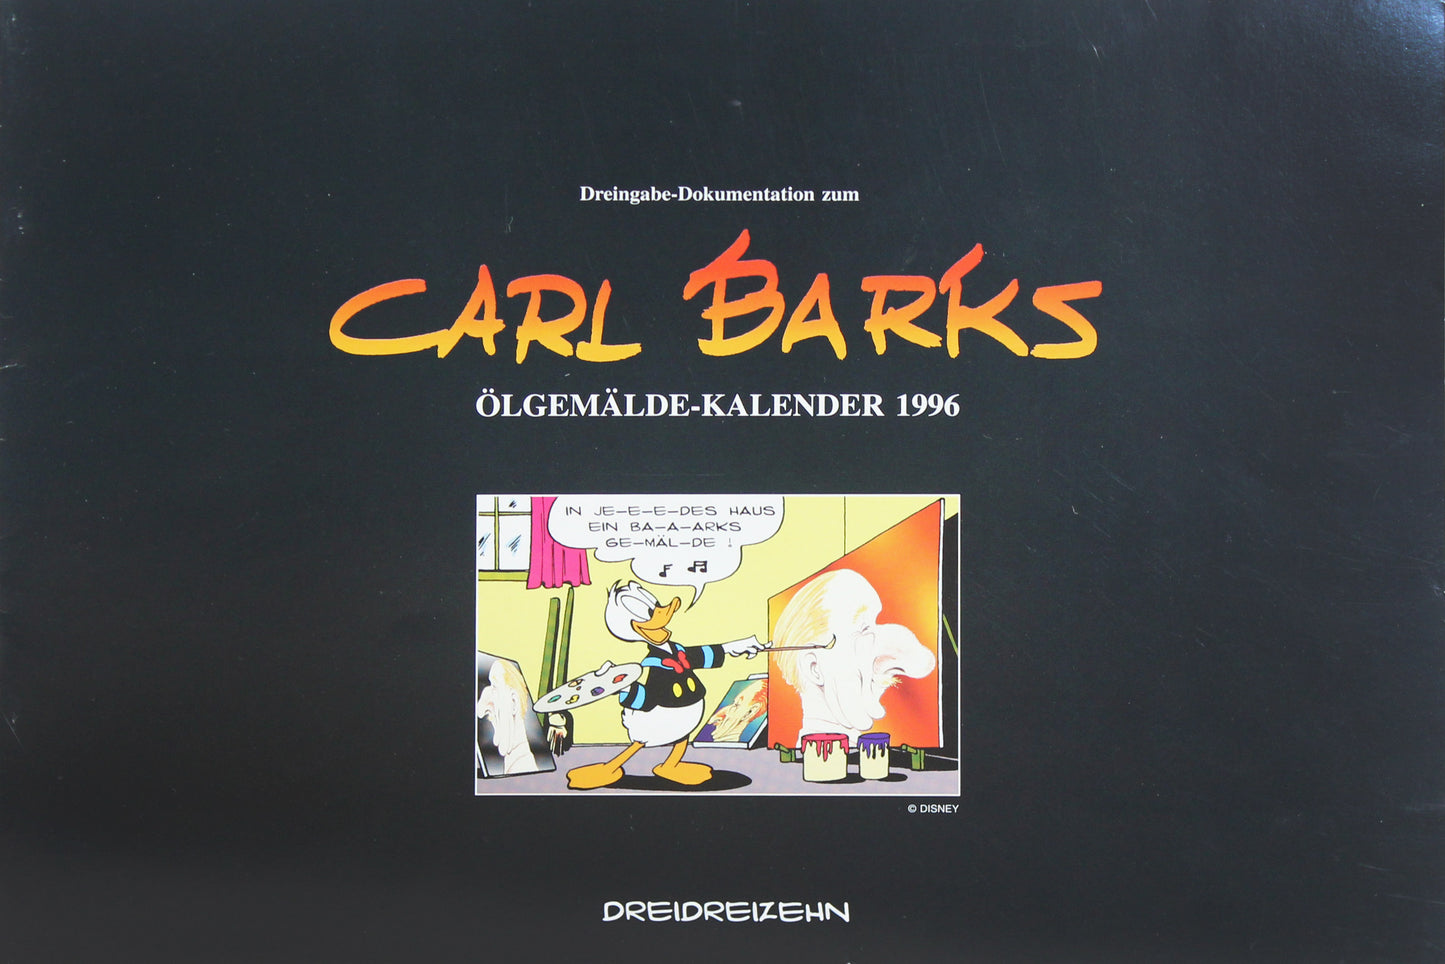 Carl Barks Bildermappe 1996